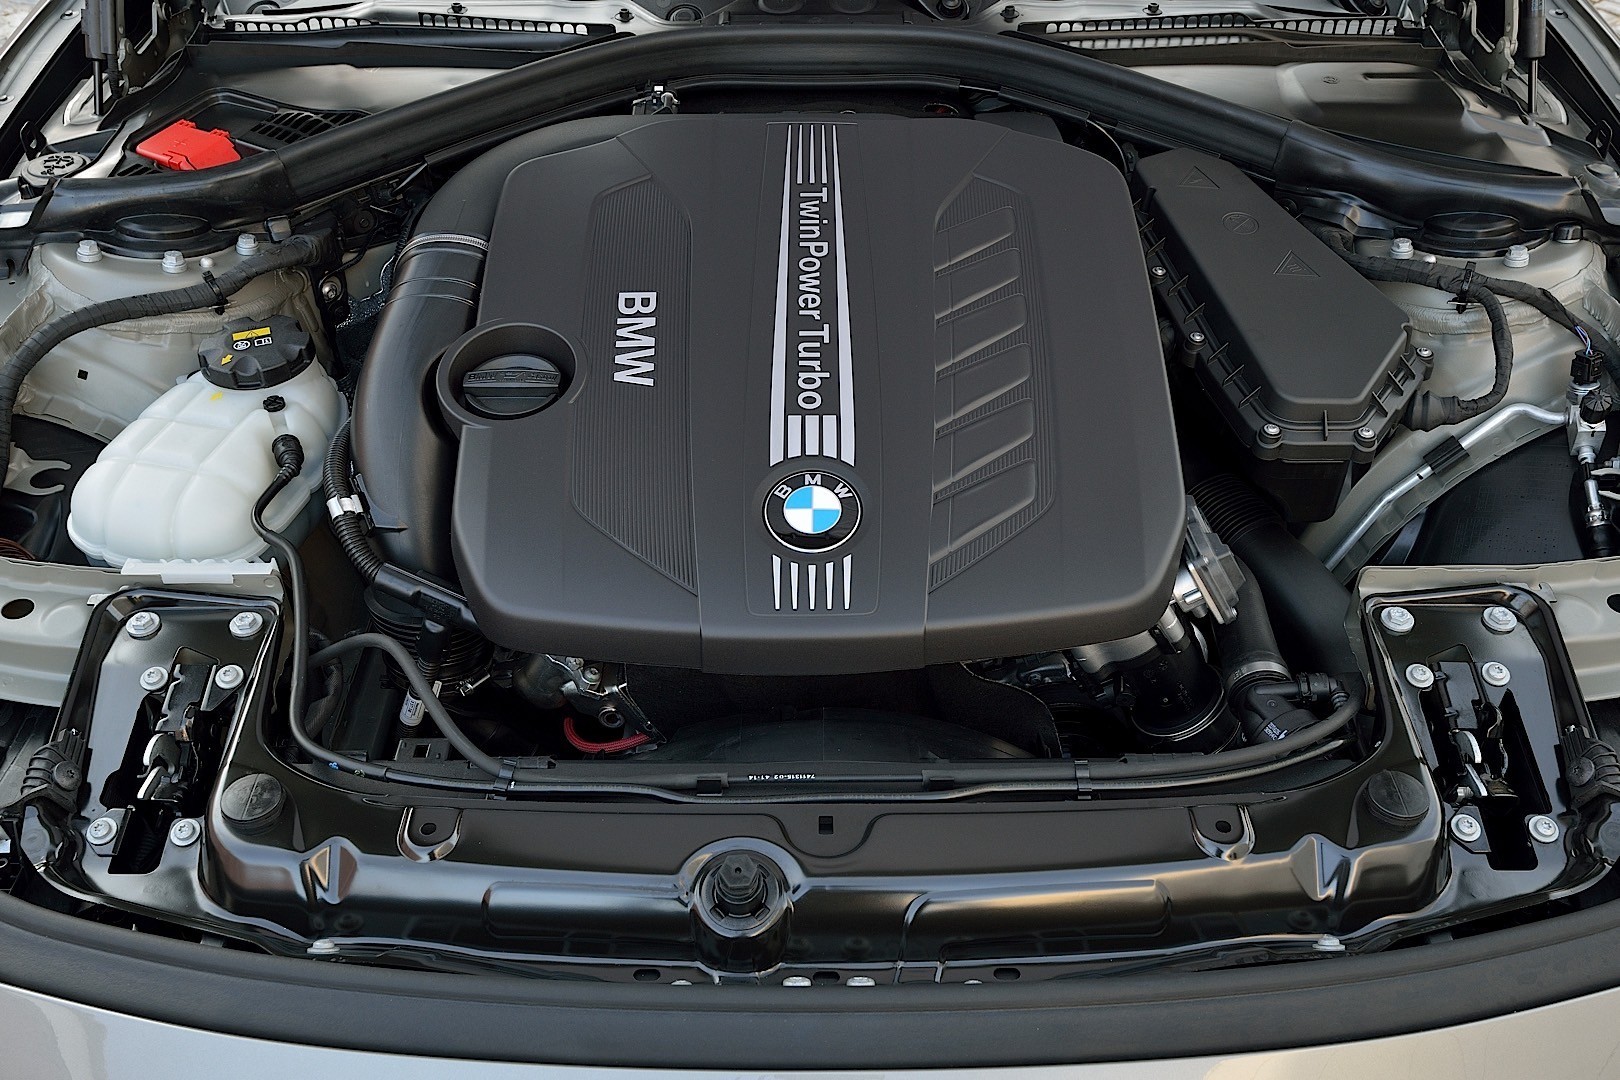 BMW F30 320i Review by Car Advice - autoevolution